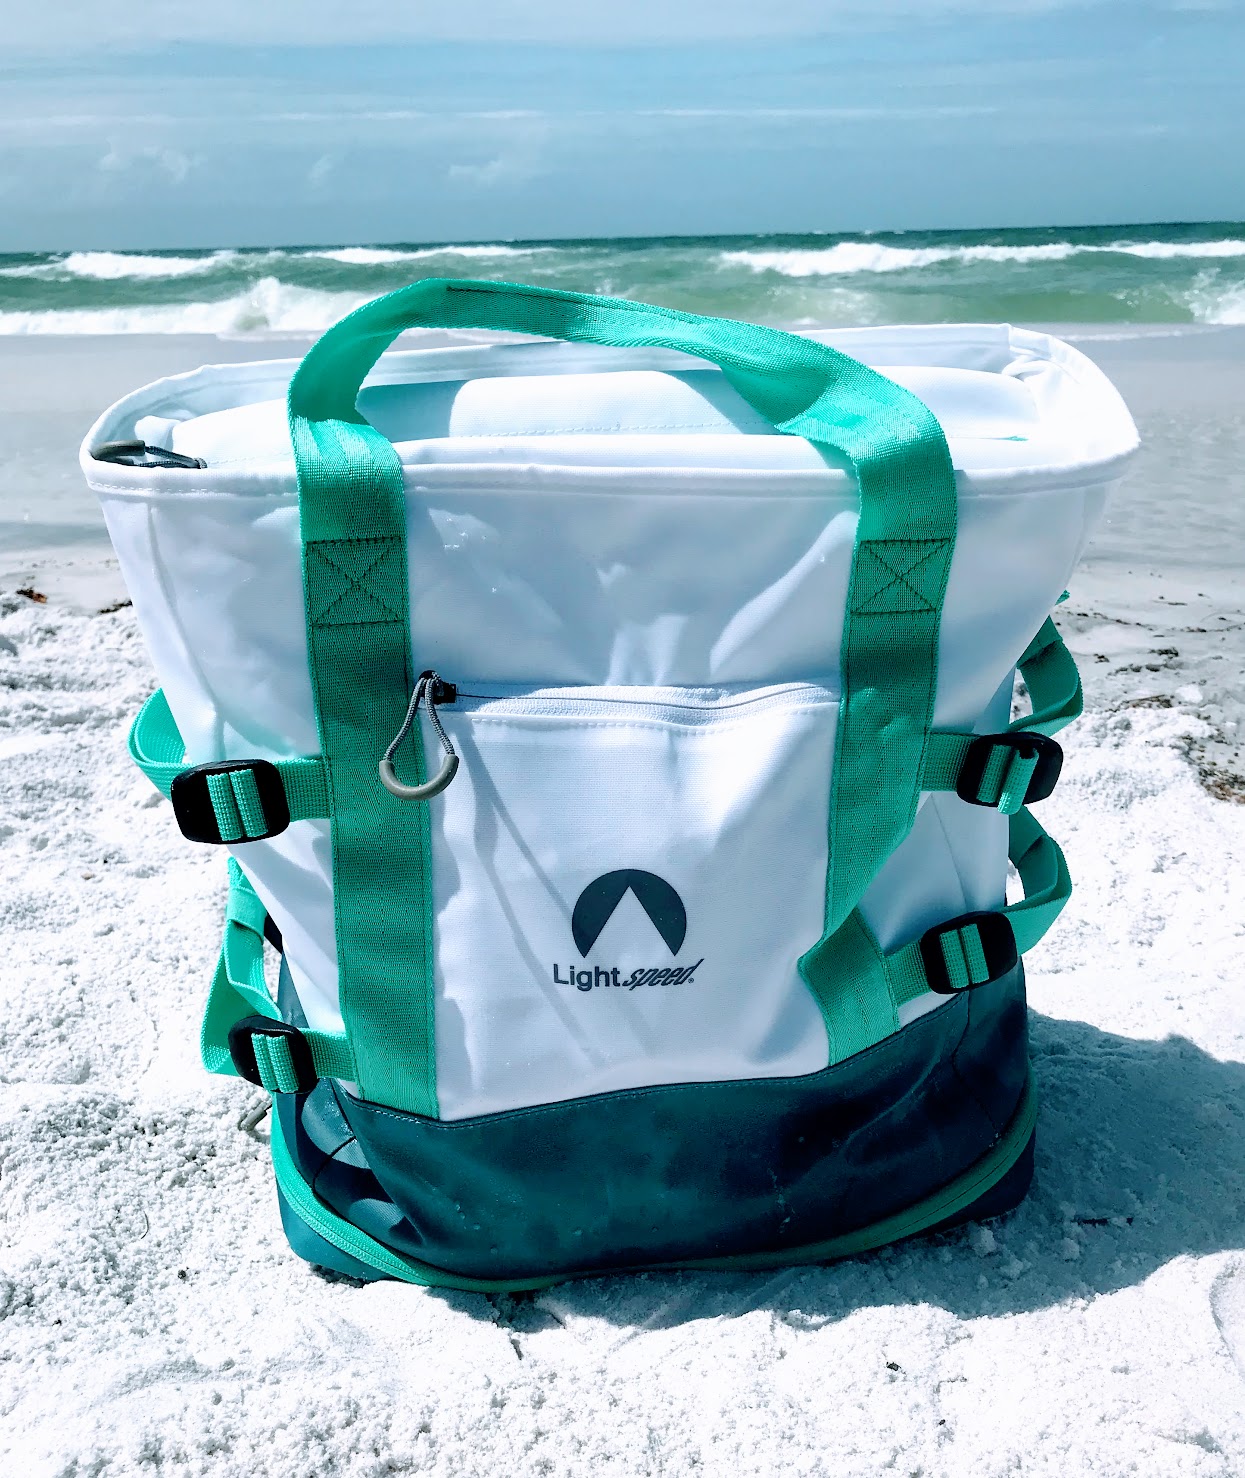 Beach Tote Bag - Looking for Large, Waterproof, Canvas or Cute?